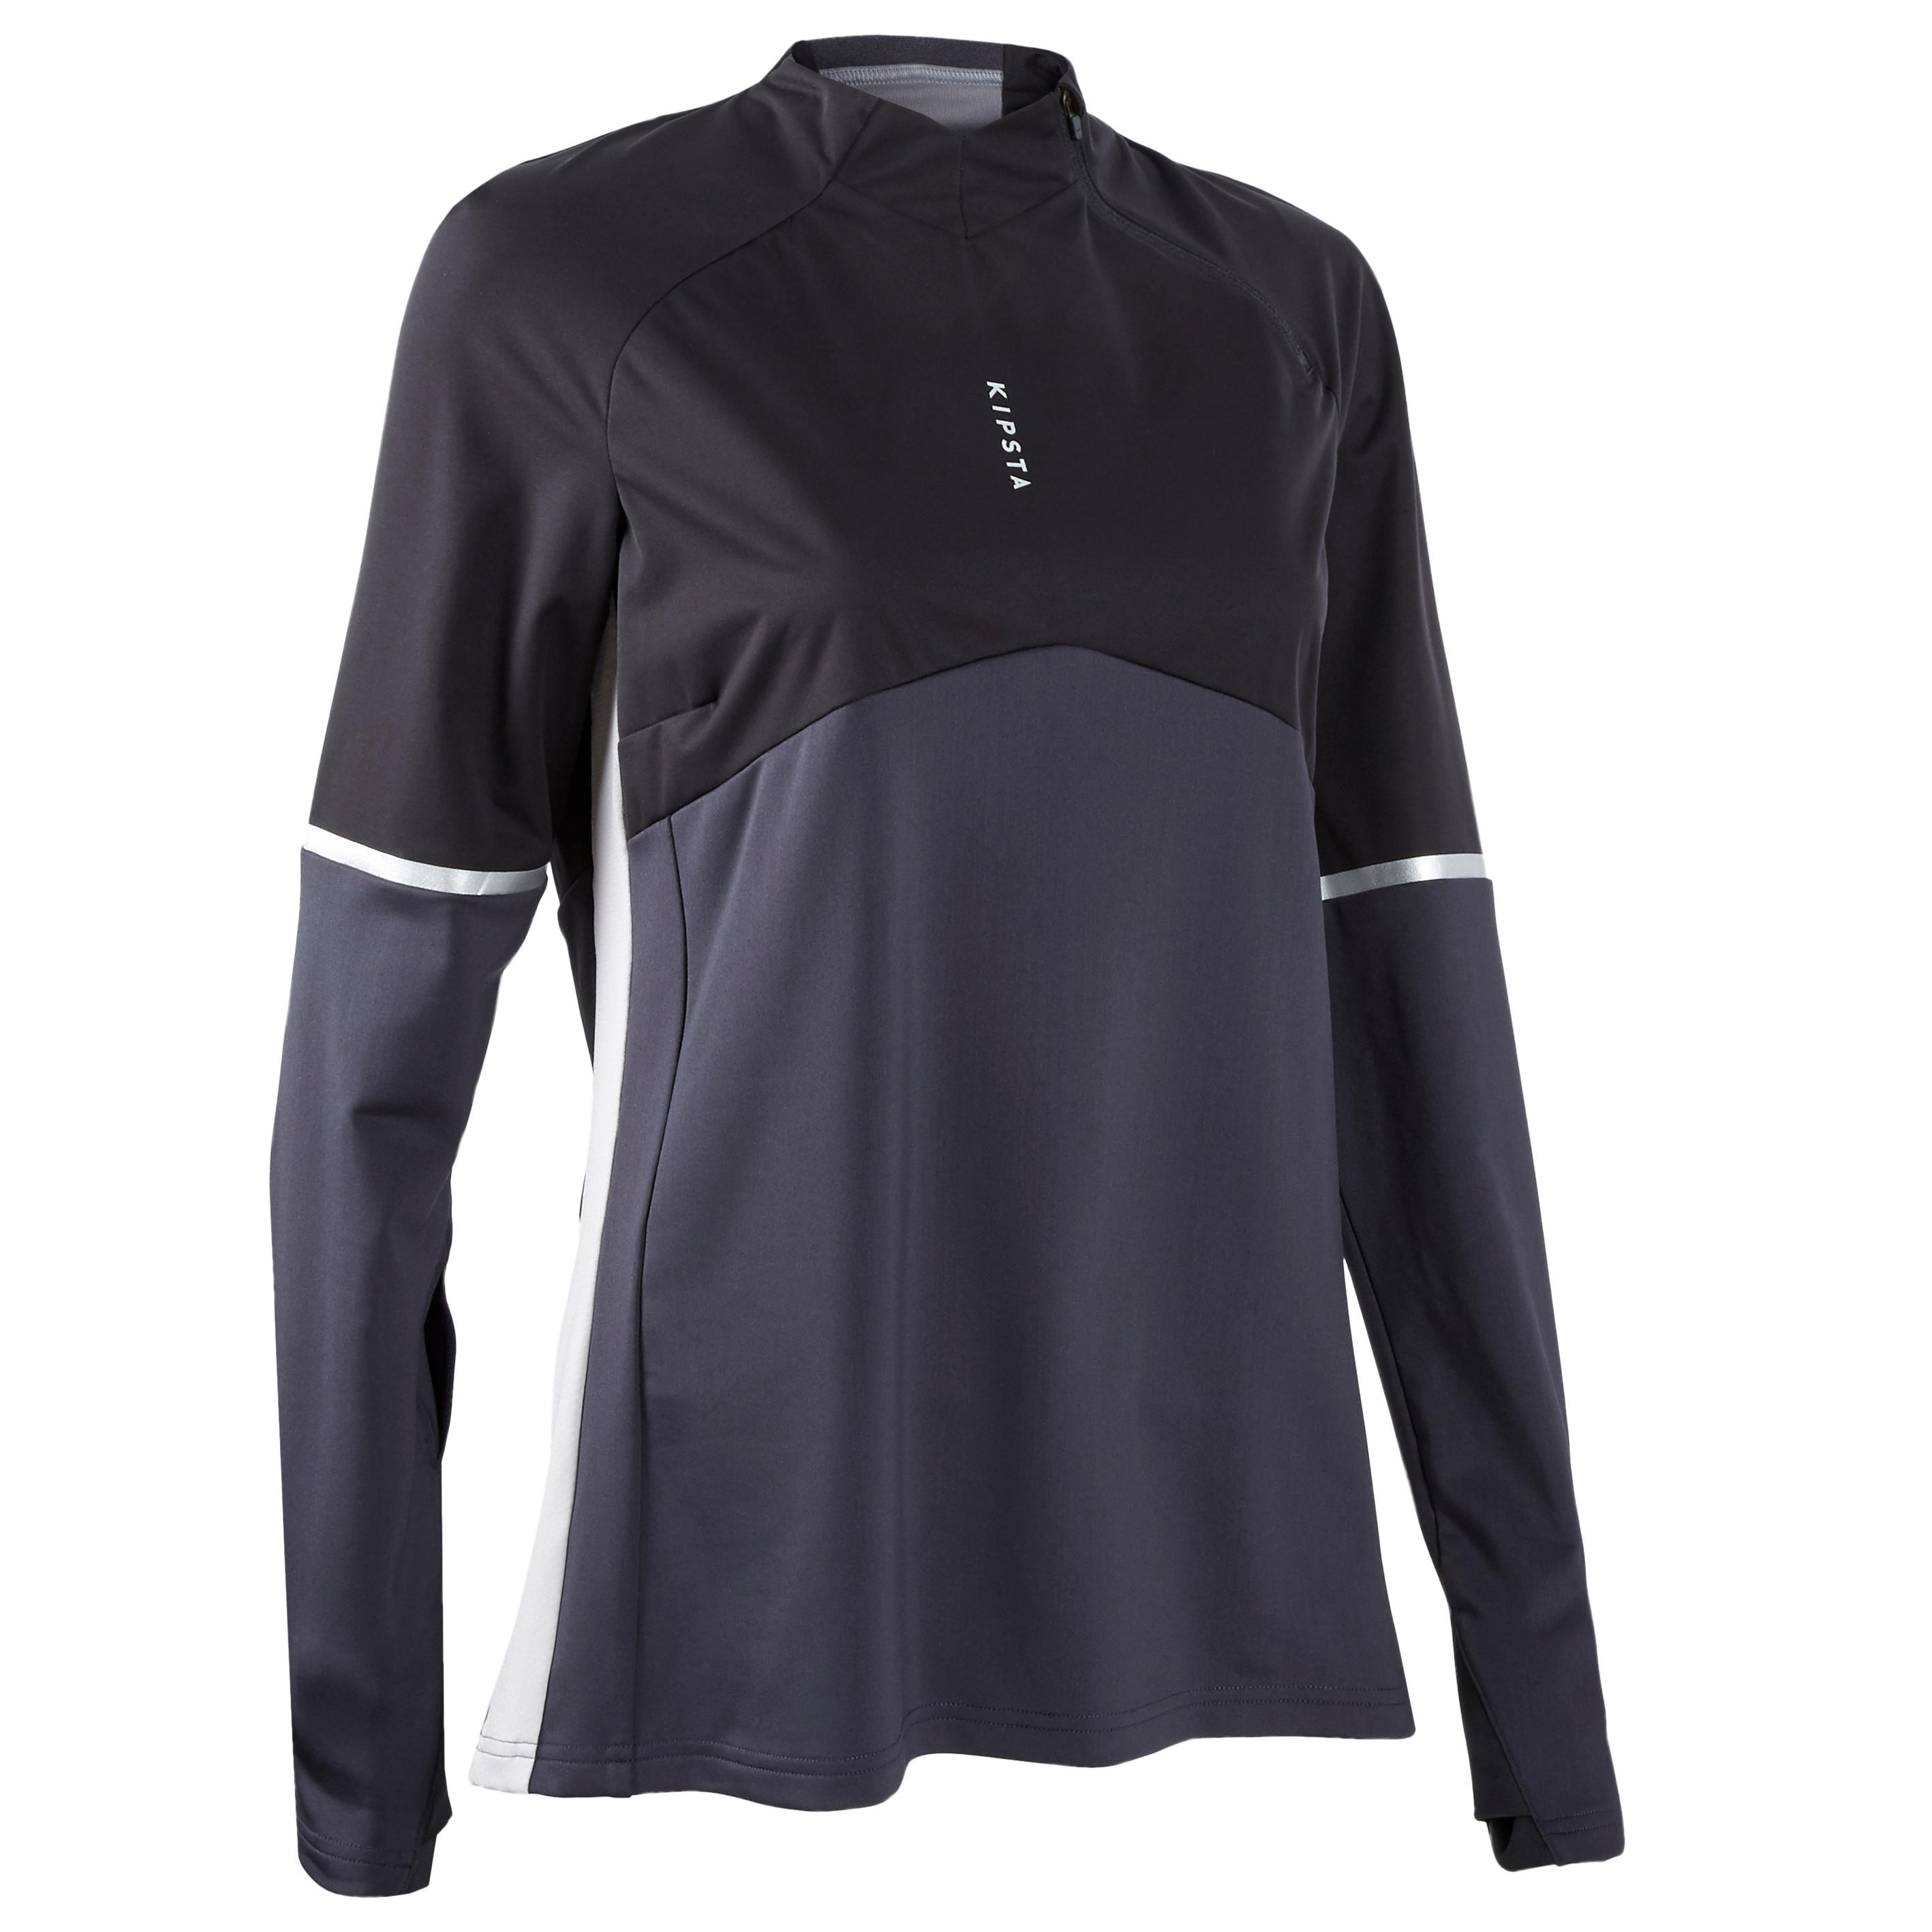 KIPSTA T500 Women's Football Training Sweatshirt - Black